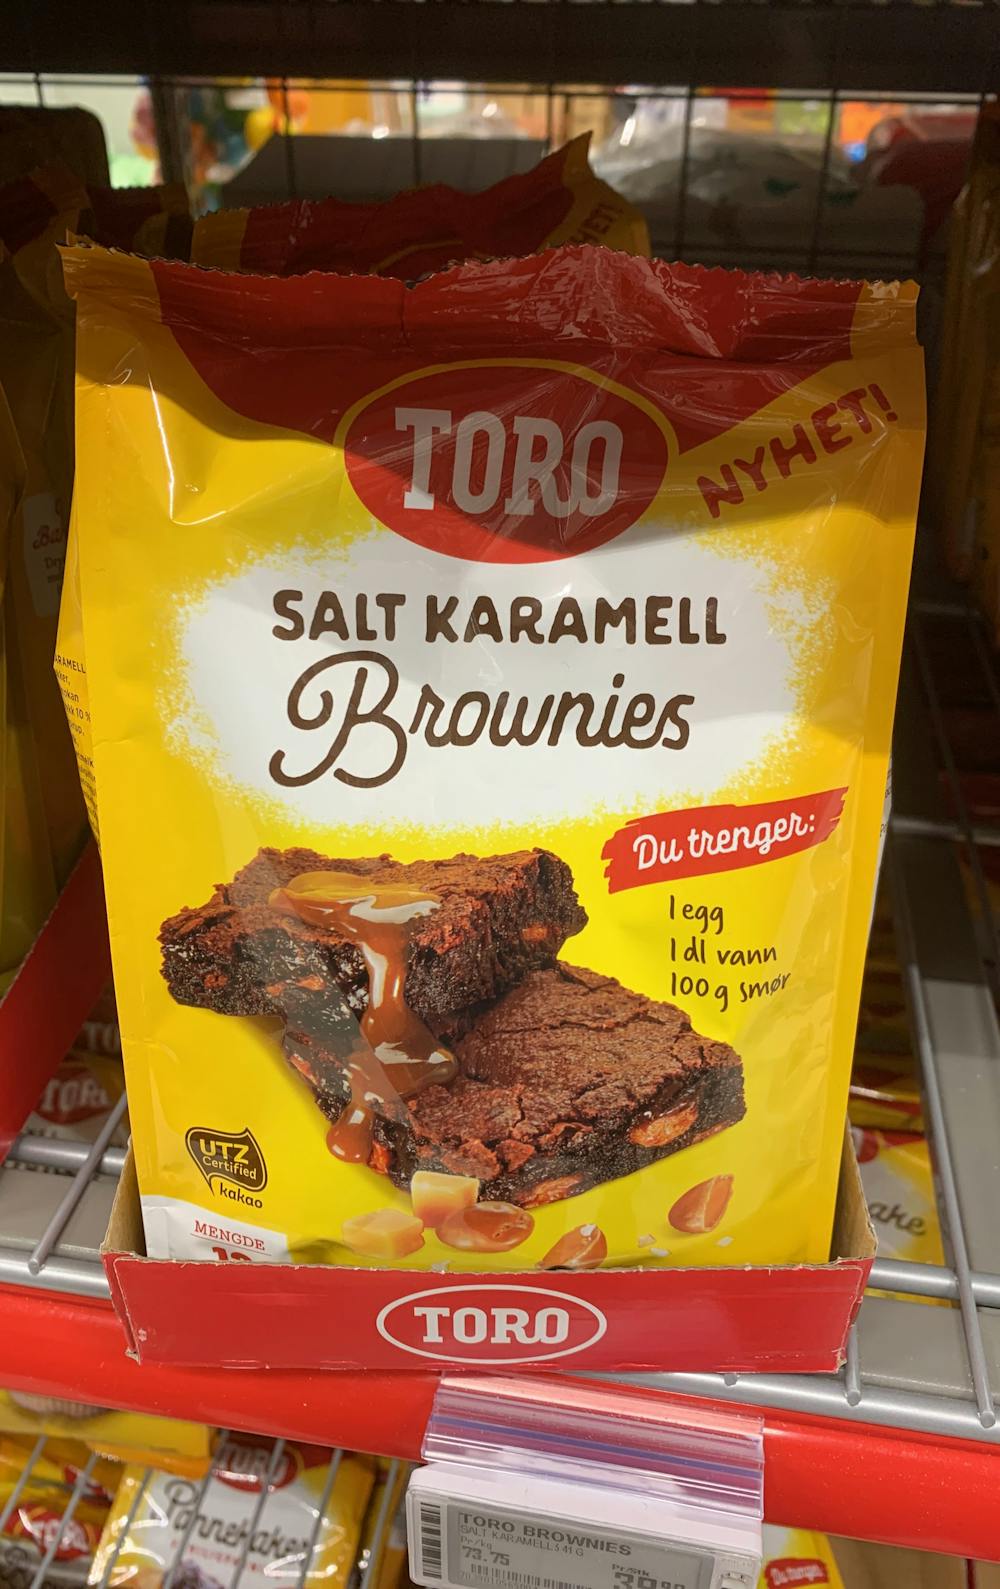 Salt karamell brownies, Toro